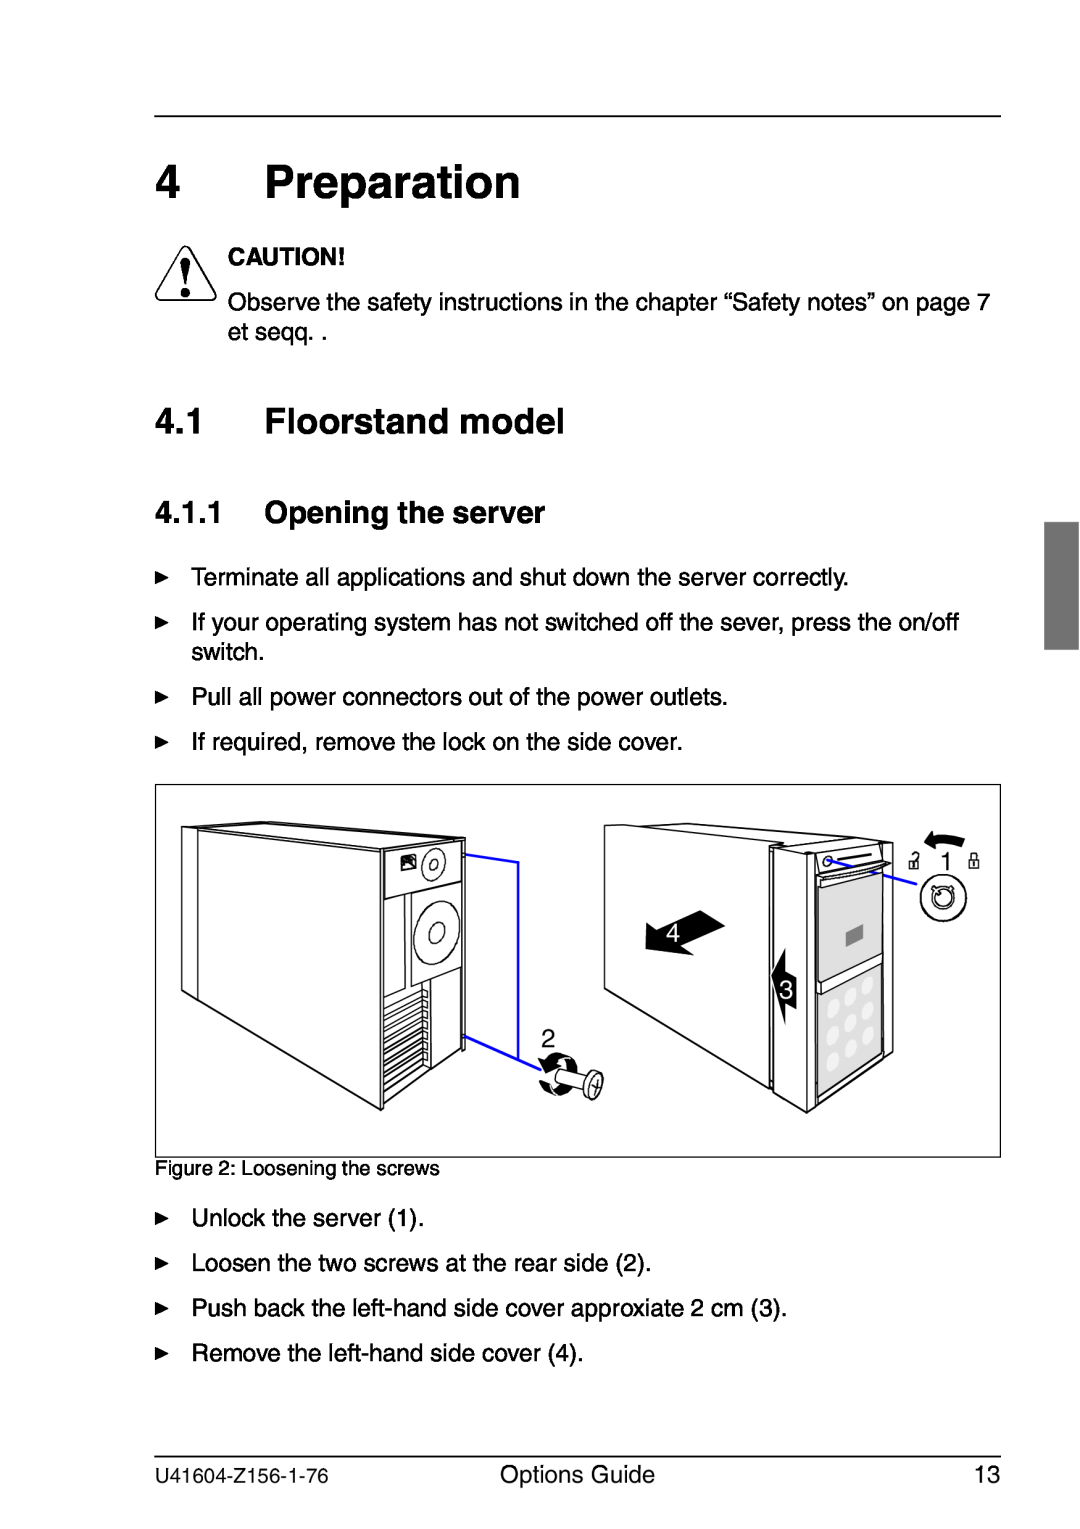 Fujitsu TX150 S3 manual Preparation, Floorstand model, Opening the server, V Caution 